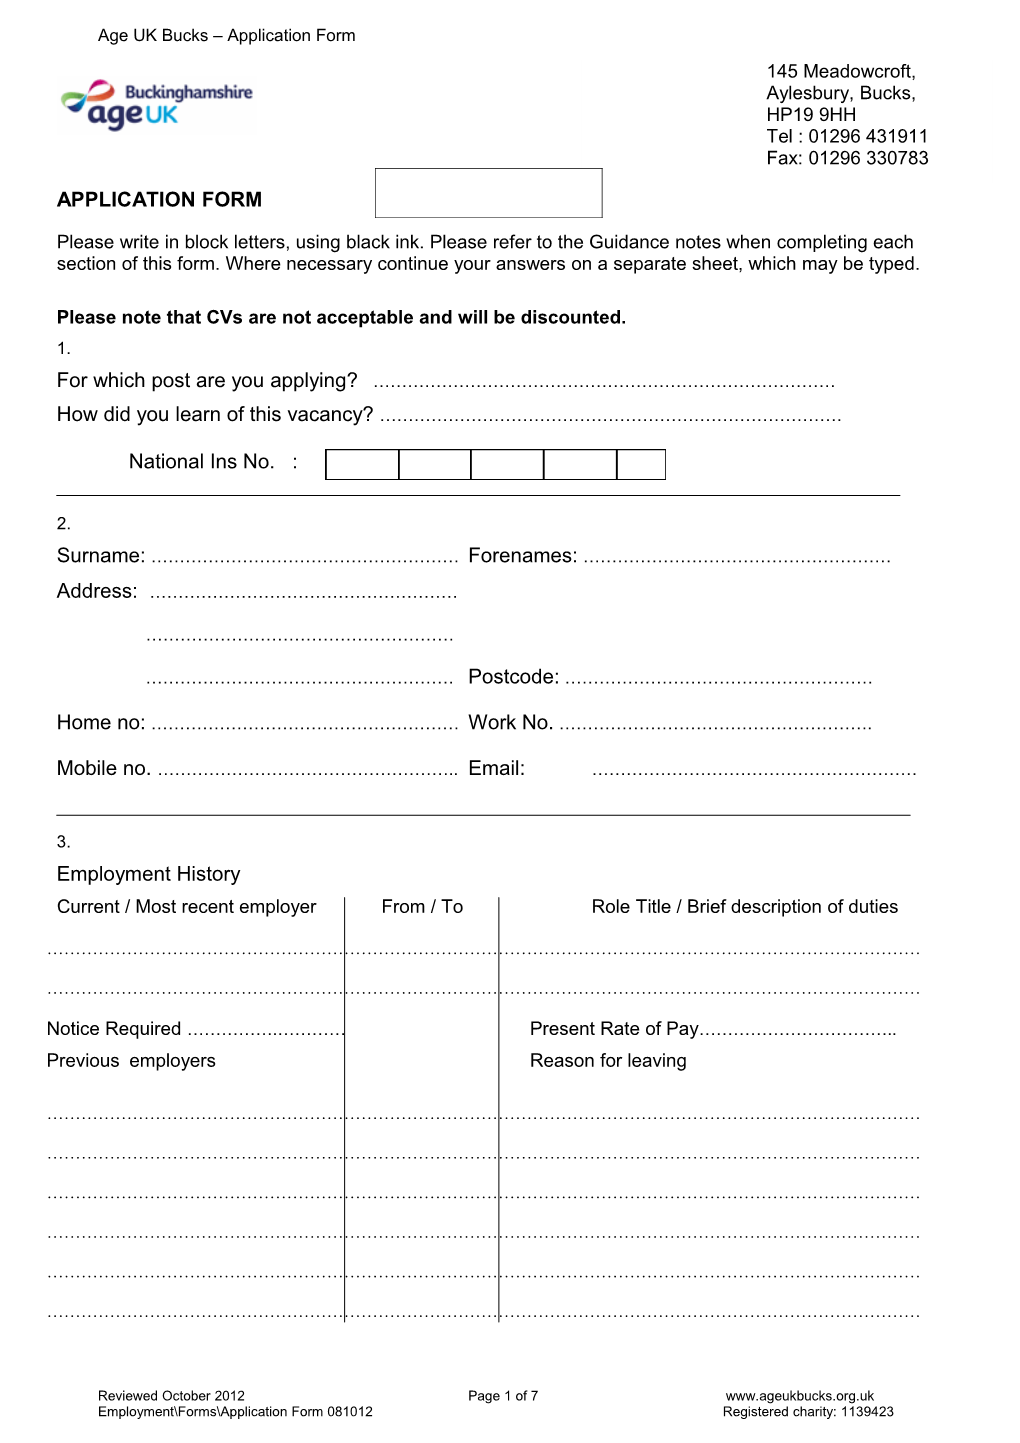 Age UK Bucks Application Form